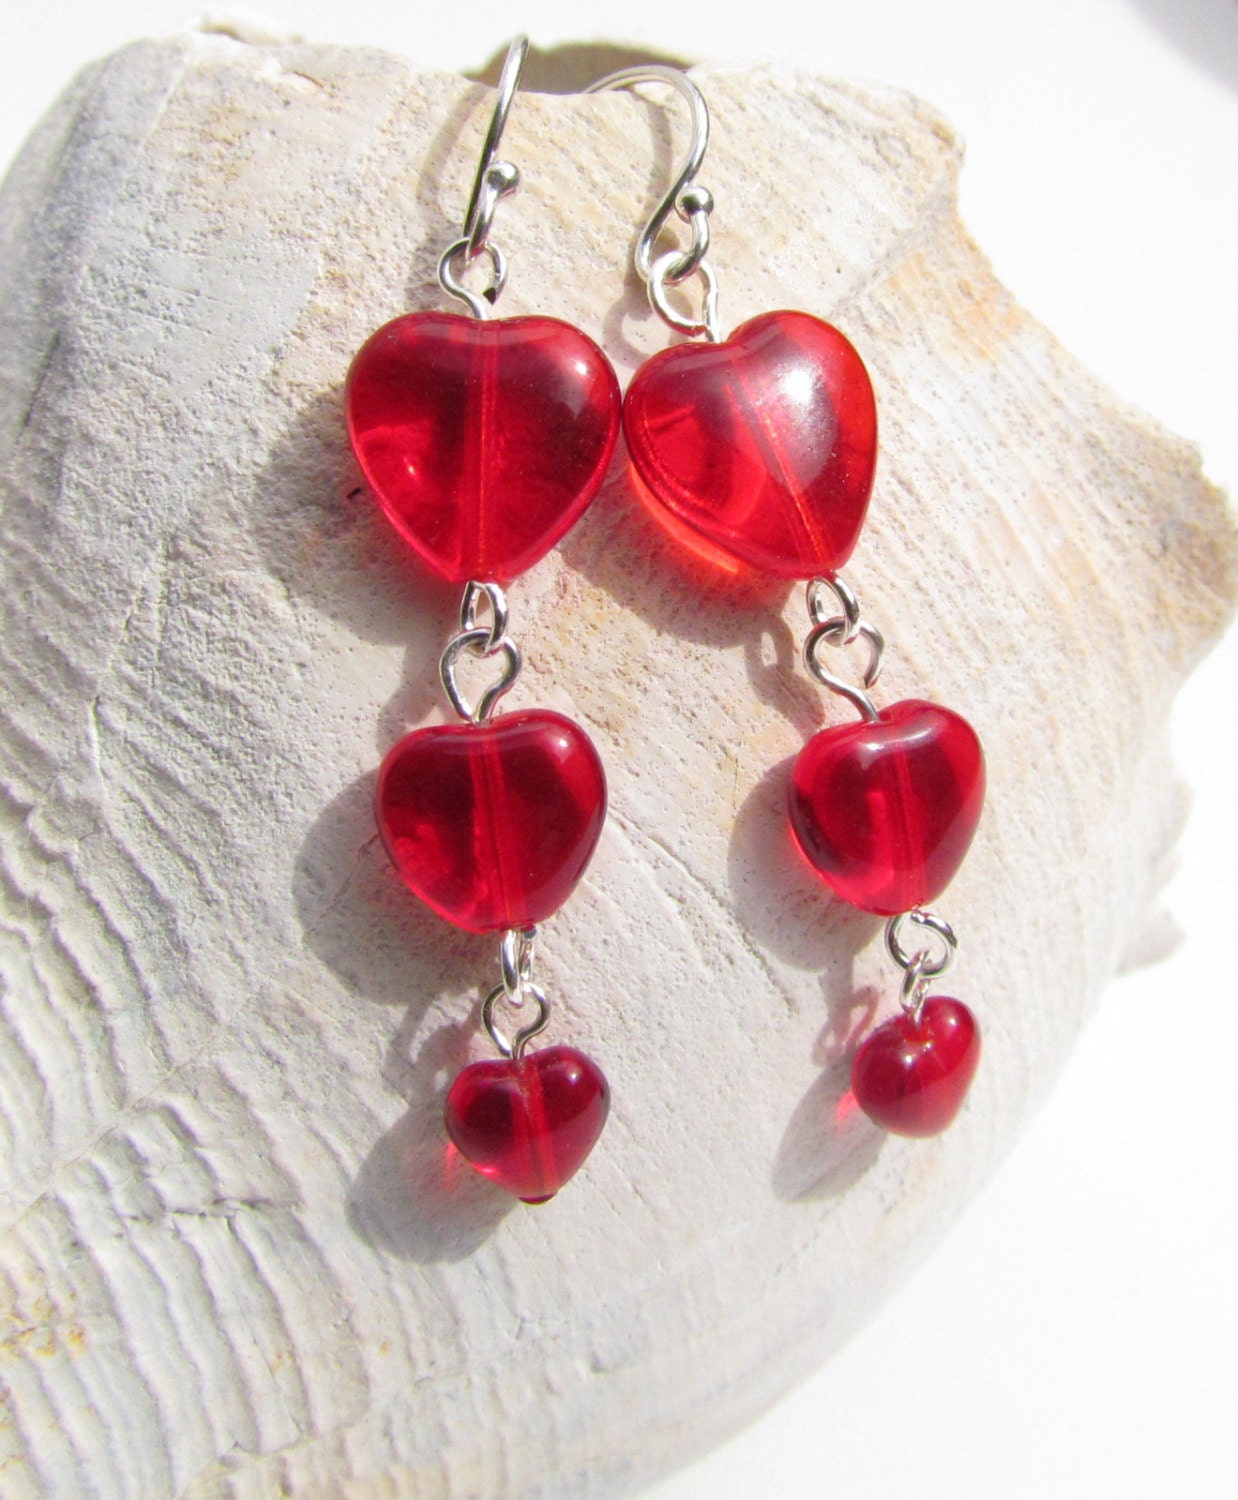 Red Heart Beaded Earrings Handmade by Harleypaws SRAJD